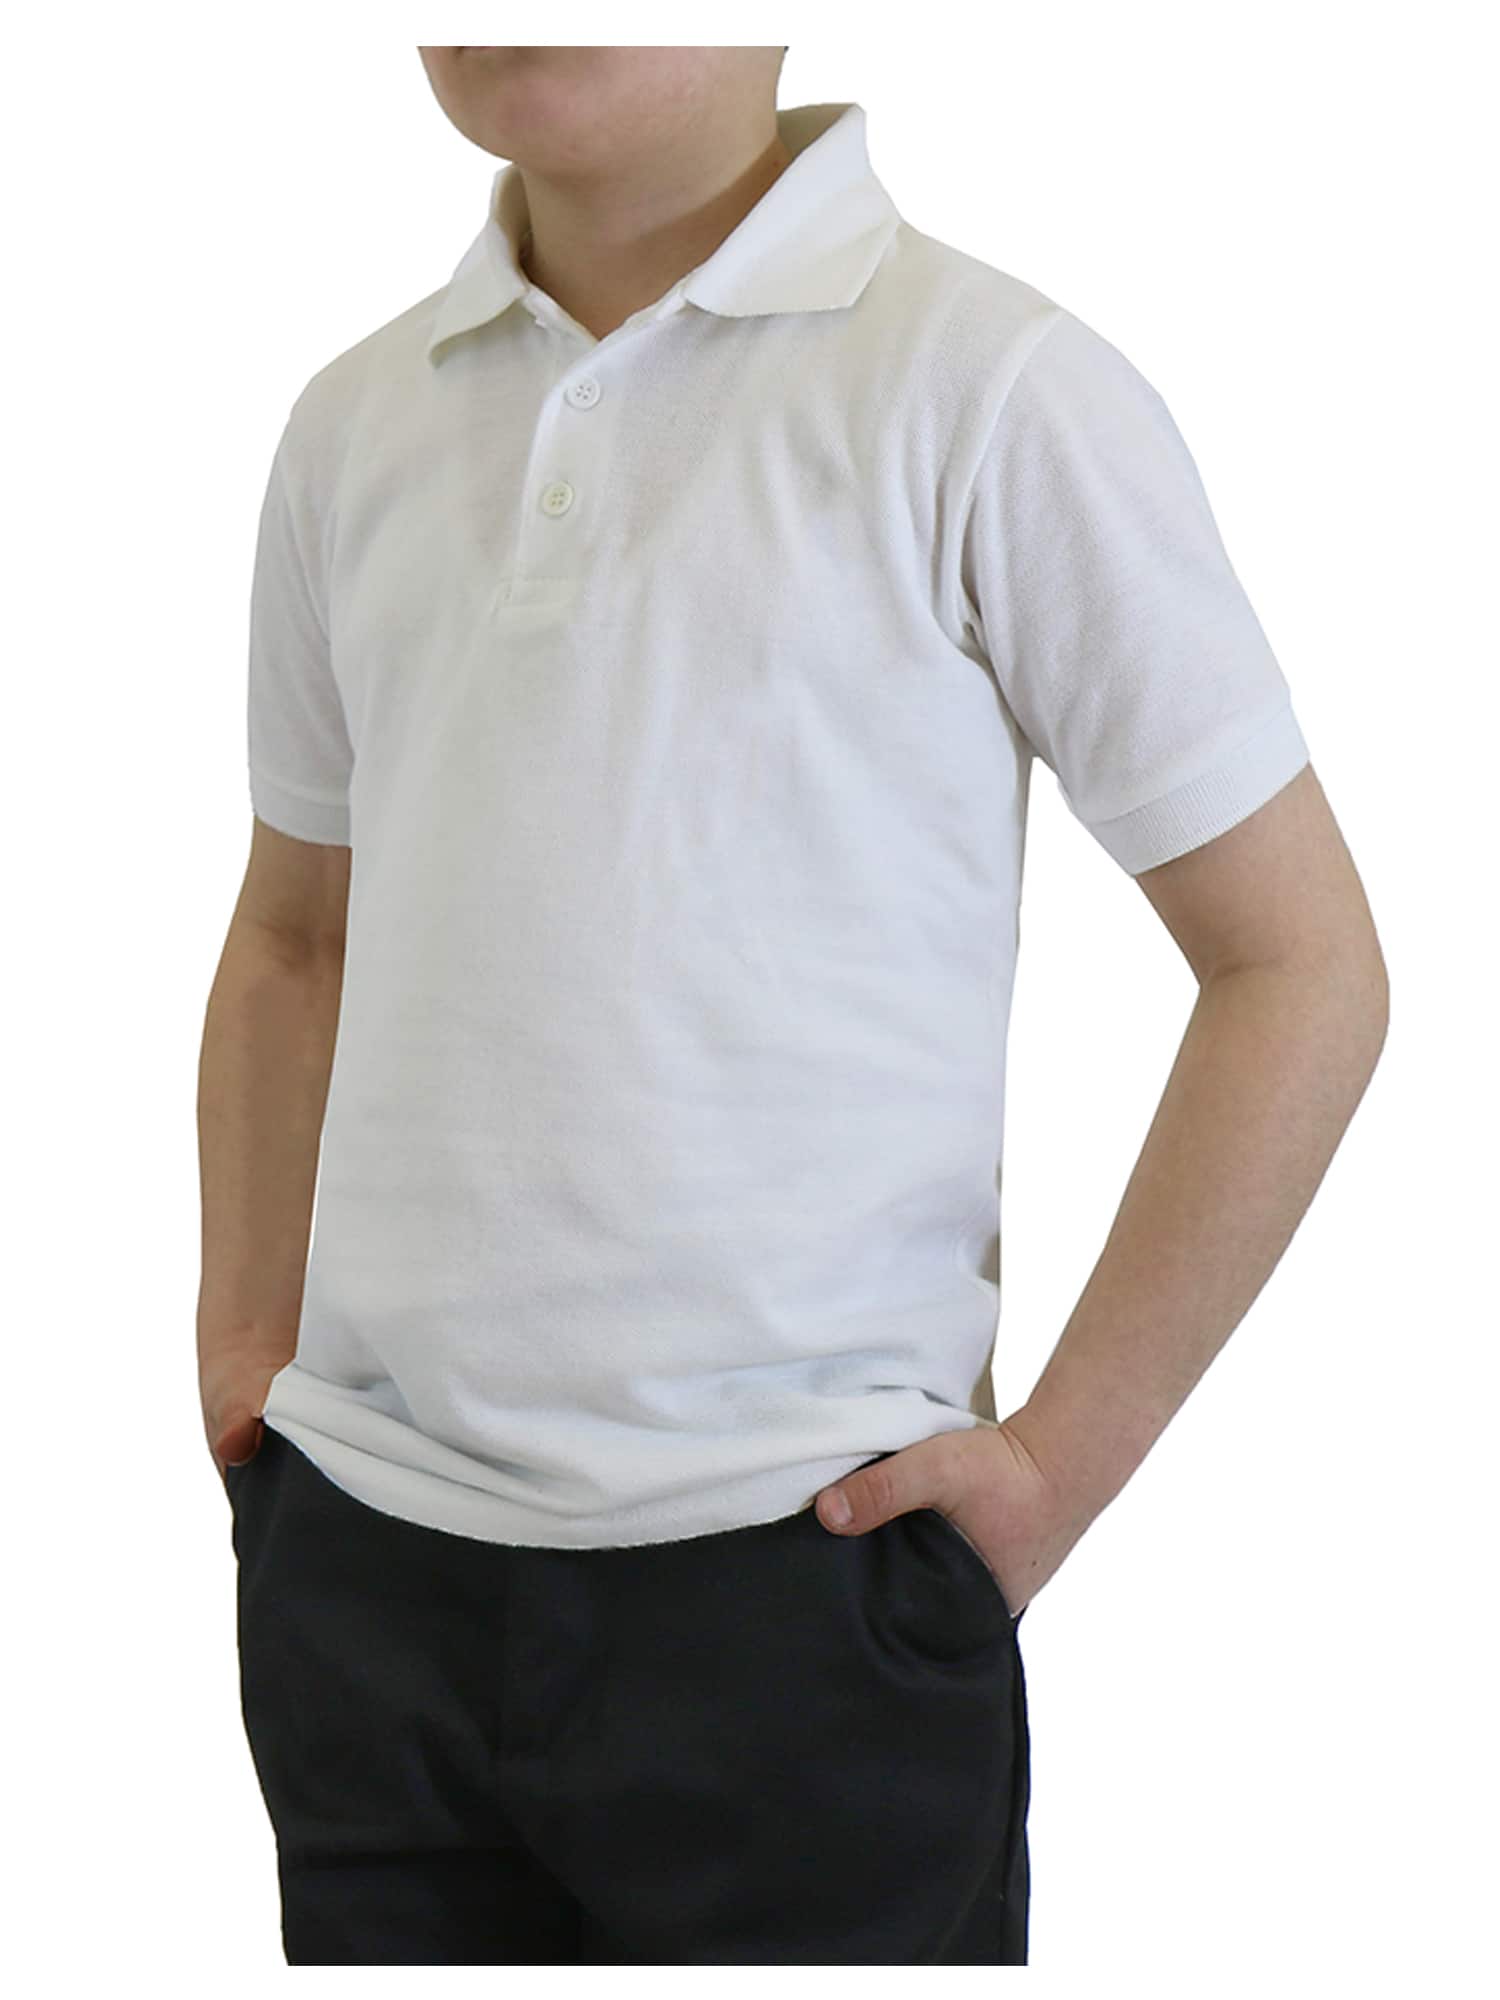 Galaxy by Harvic School Uniform Short Sleeve Men's Pique Polo Shirt in Royal | Small | Michaels